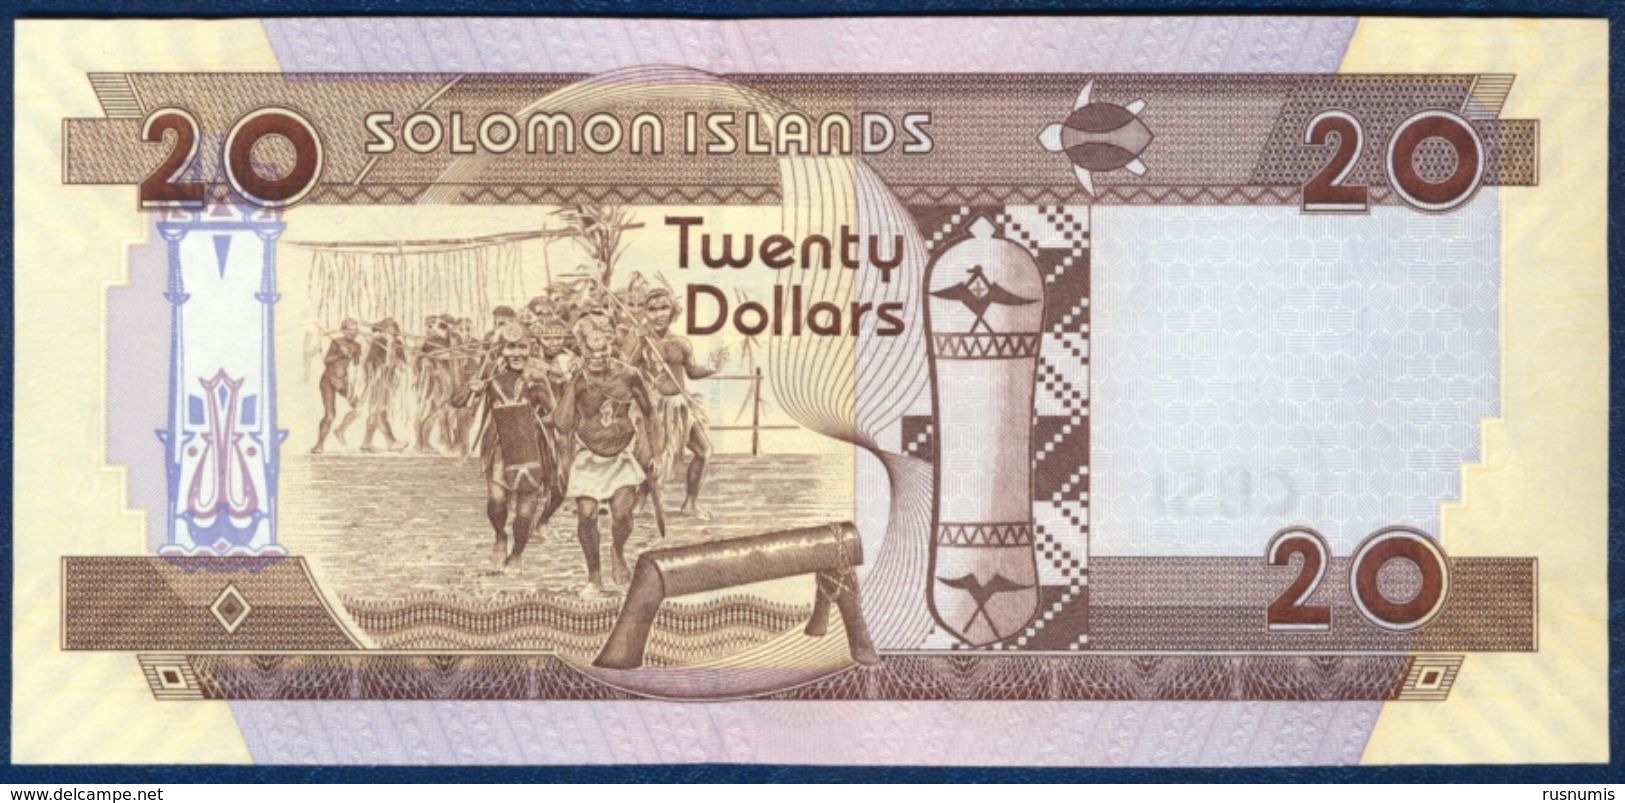 SOLOMON ISLANDS 20 DOLLARS P-28a 2004 UNC - Solomon Islands